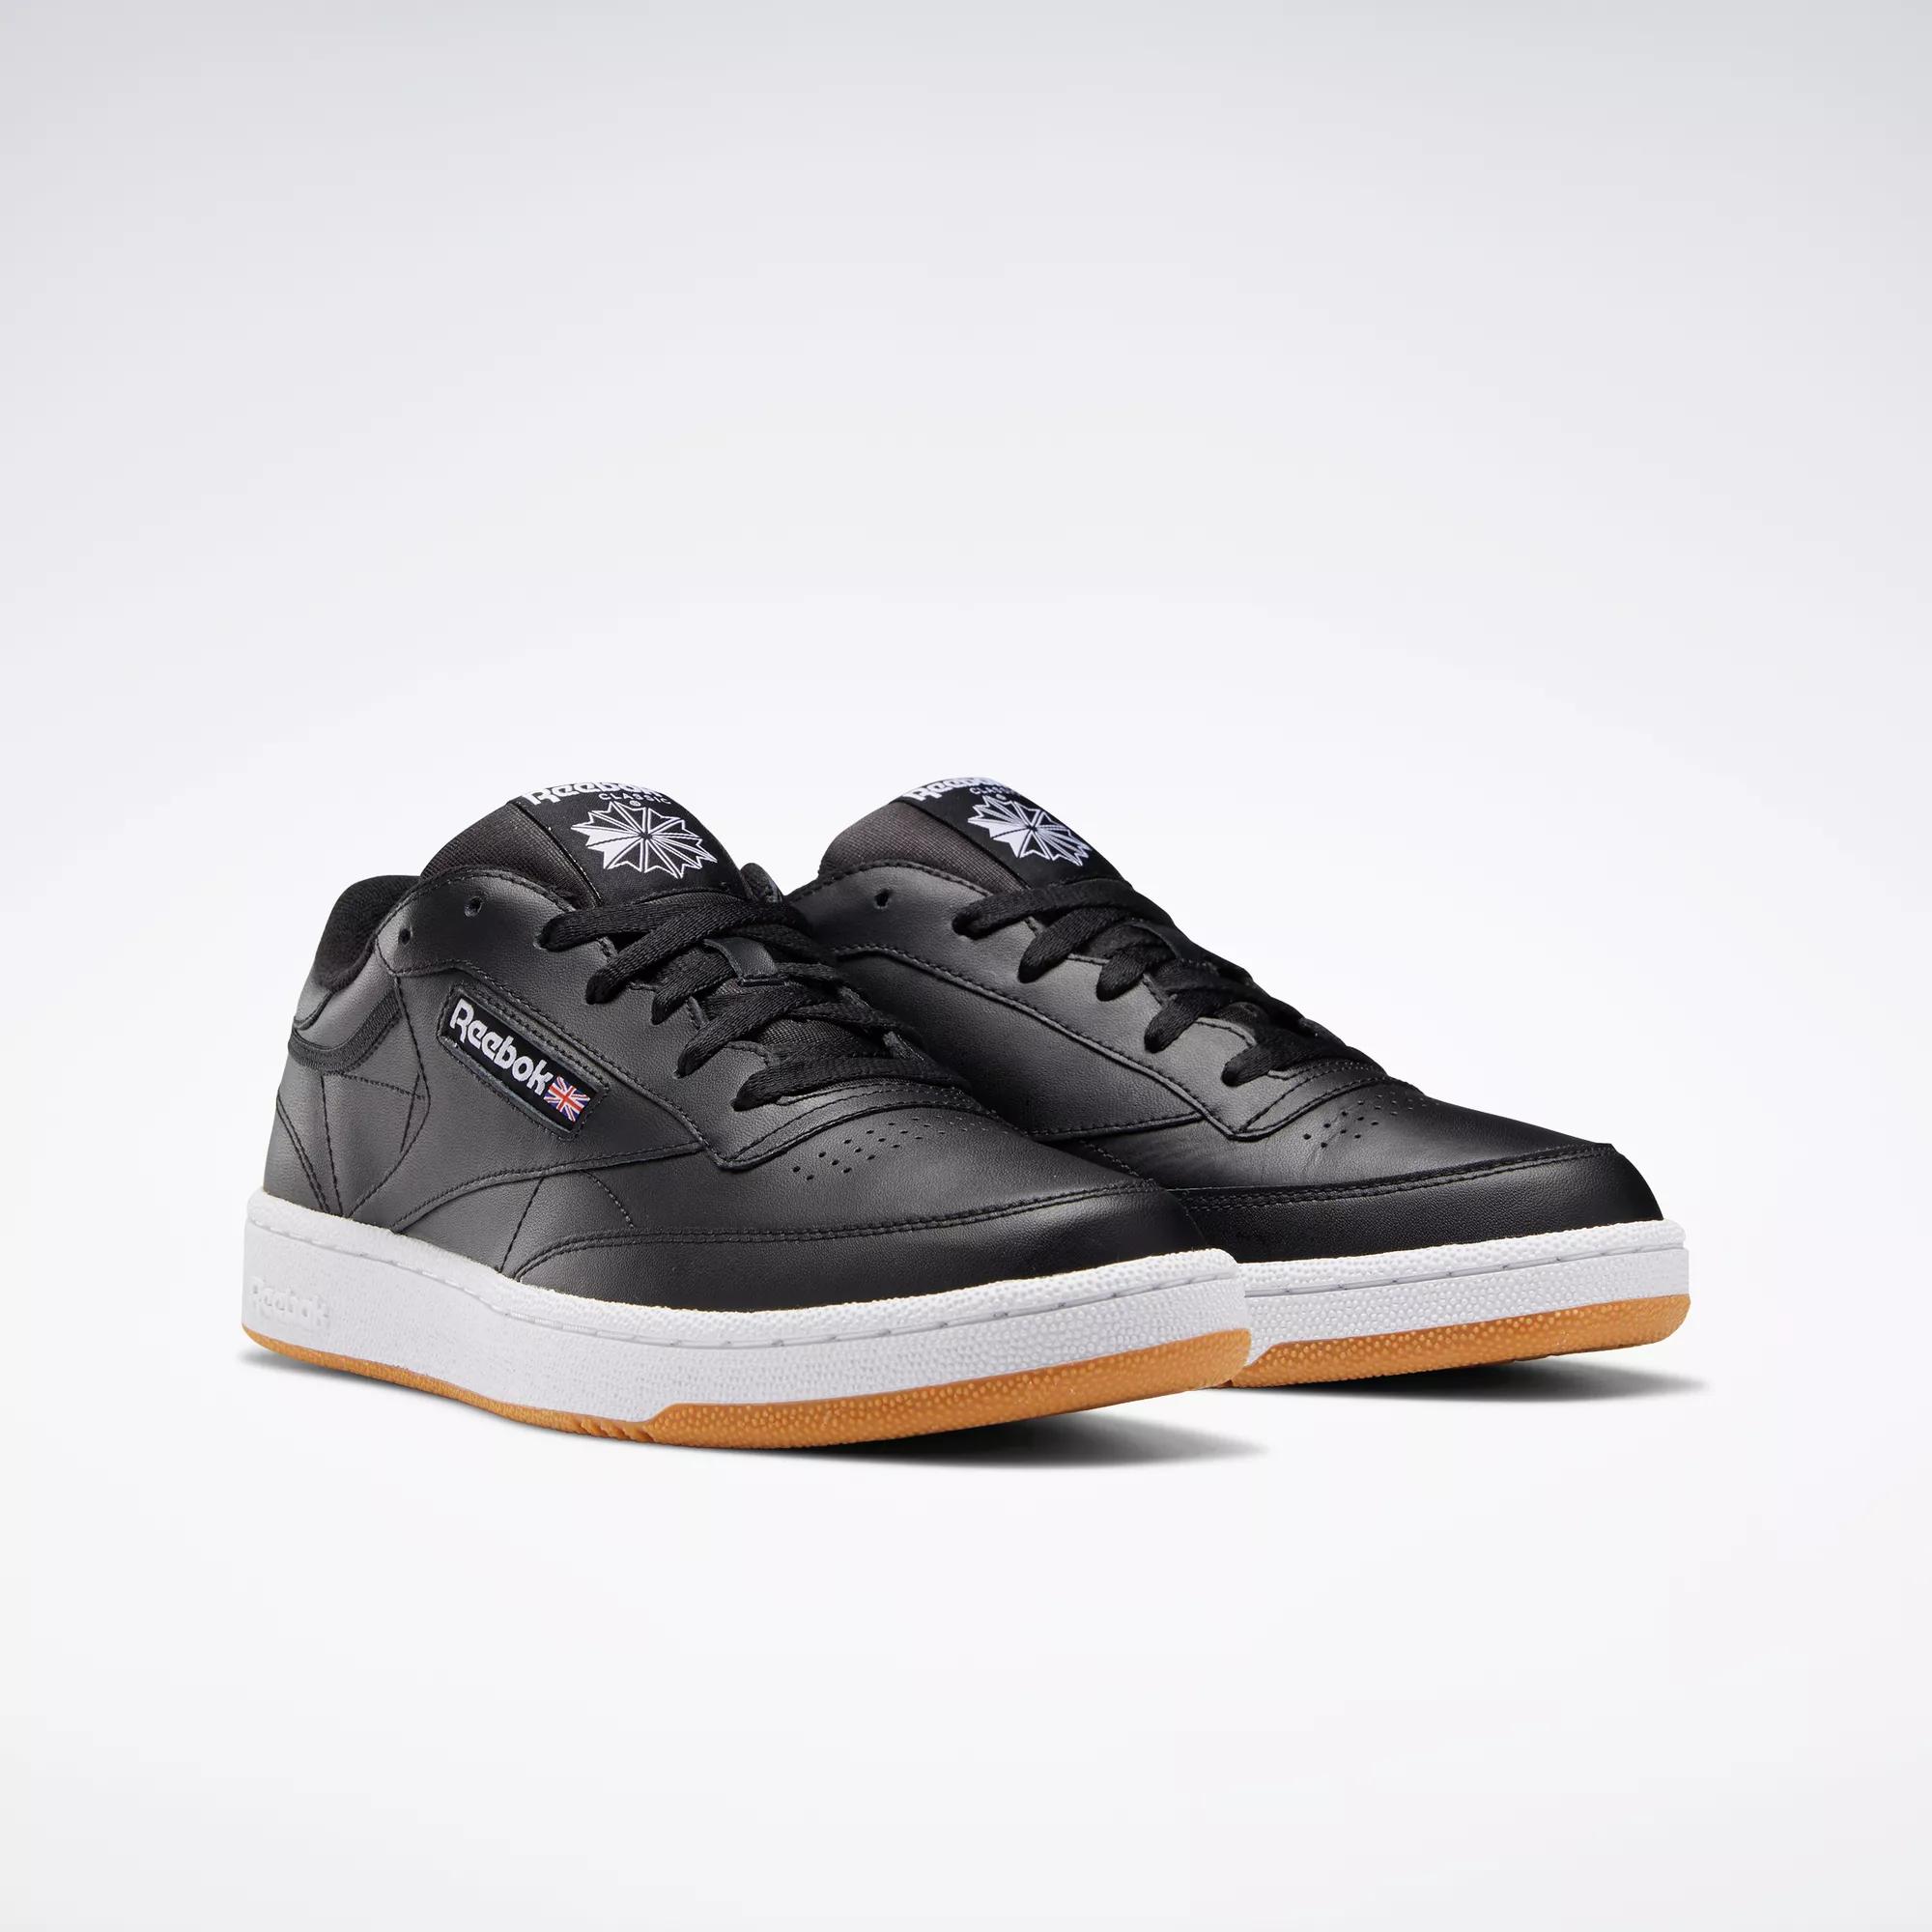 Club C 85 Men's Shoes - / White / Gum | Reebok